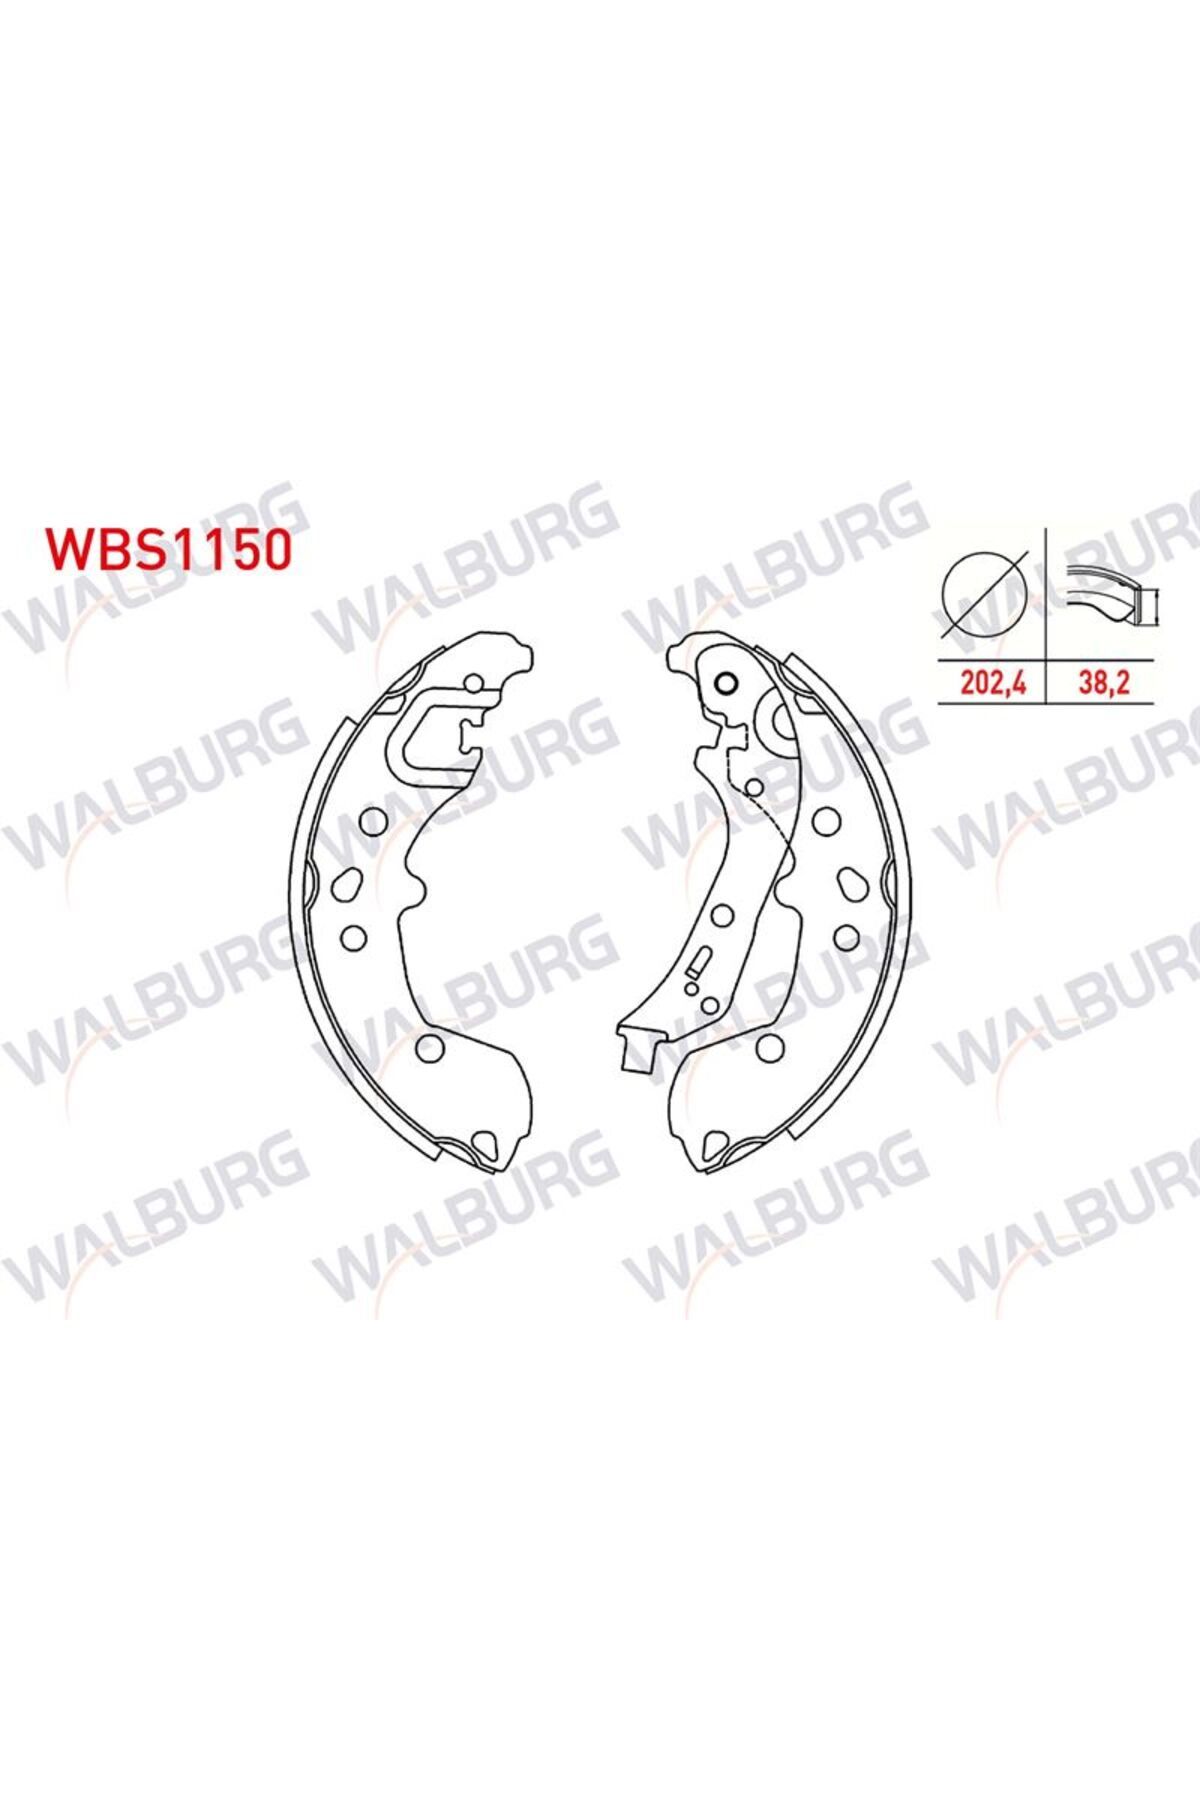 WALBURG Fren Pabuc Balata Arka Levyelı 202,4x38,2mm Volkswagen Polo (AW1) 2018-/ Seat Ibıza V (KJ1) 2017-wbs